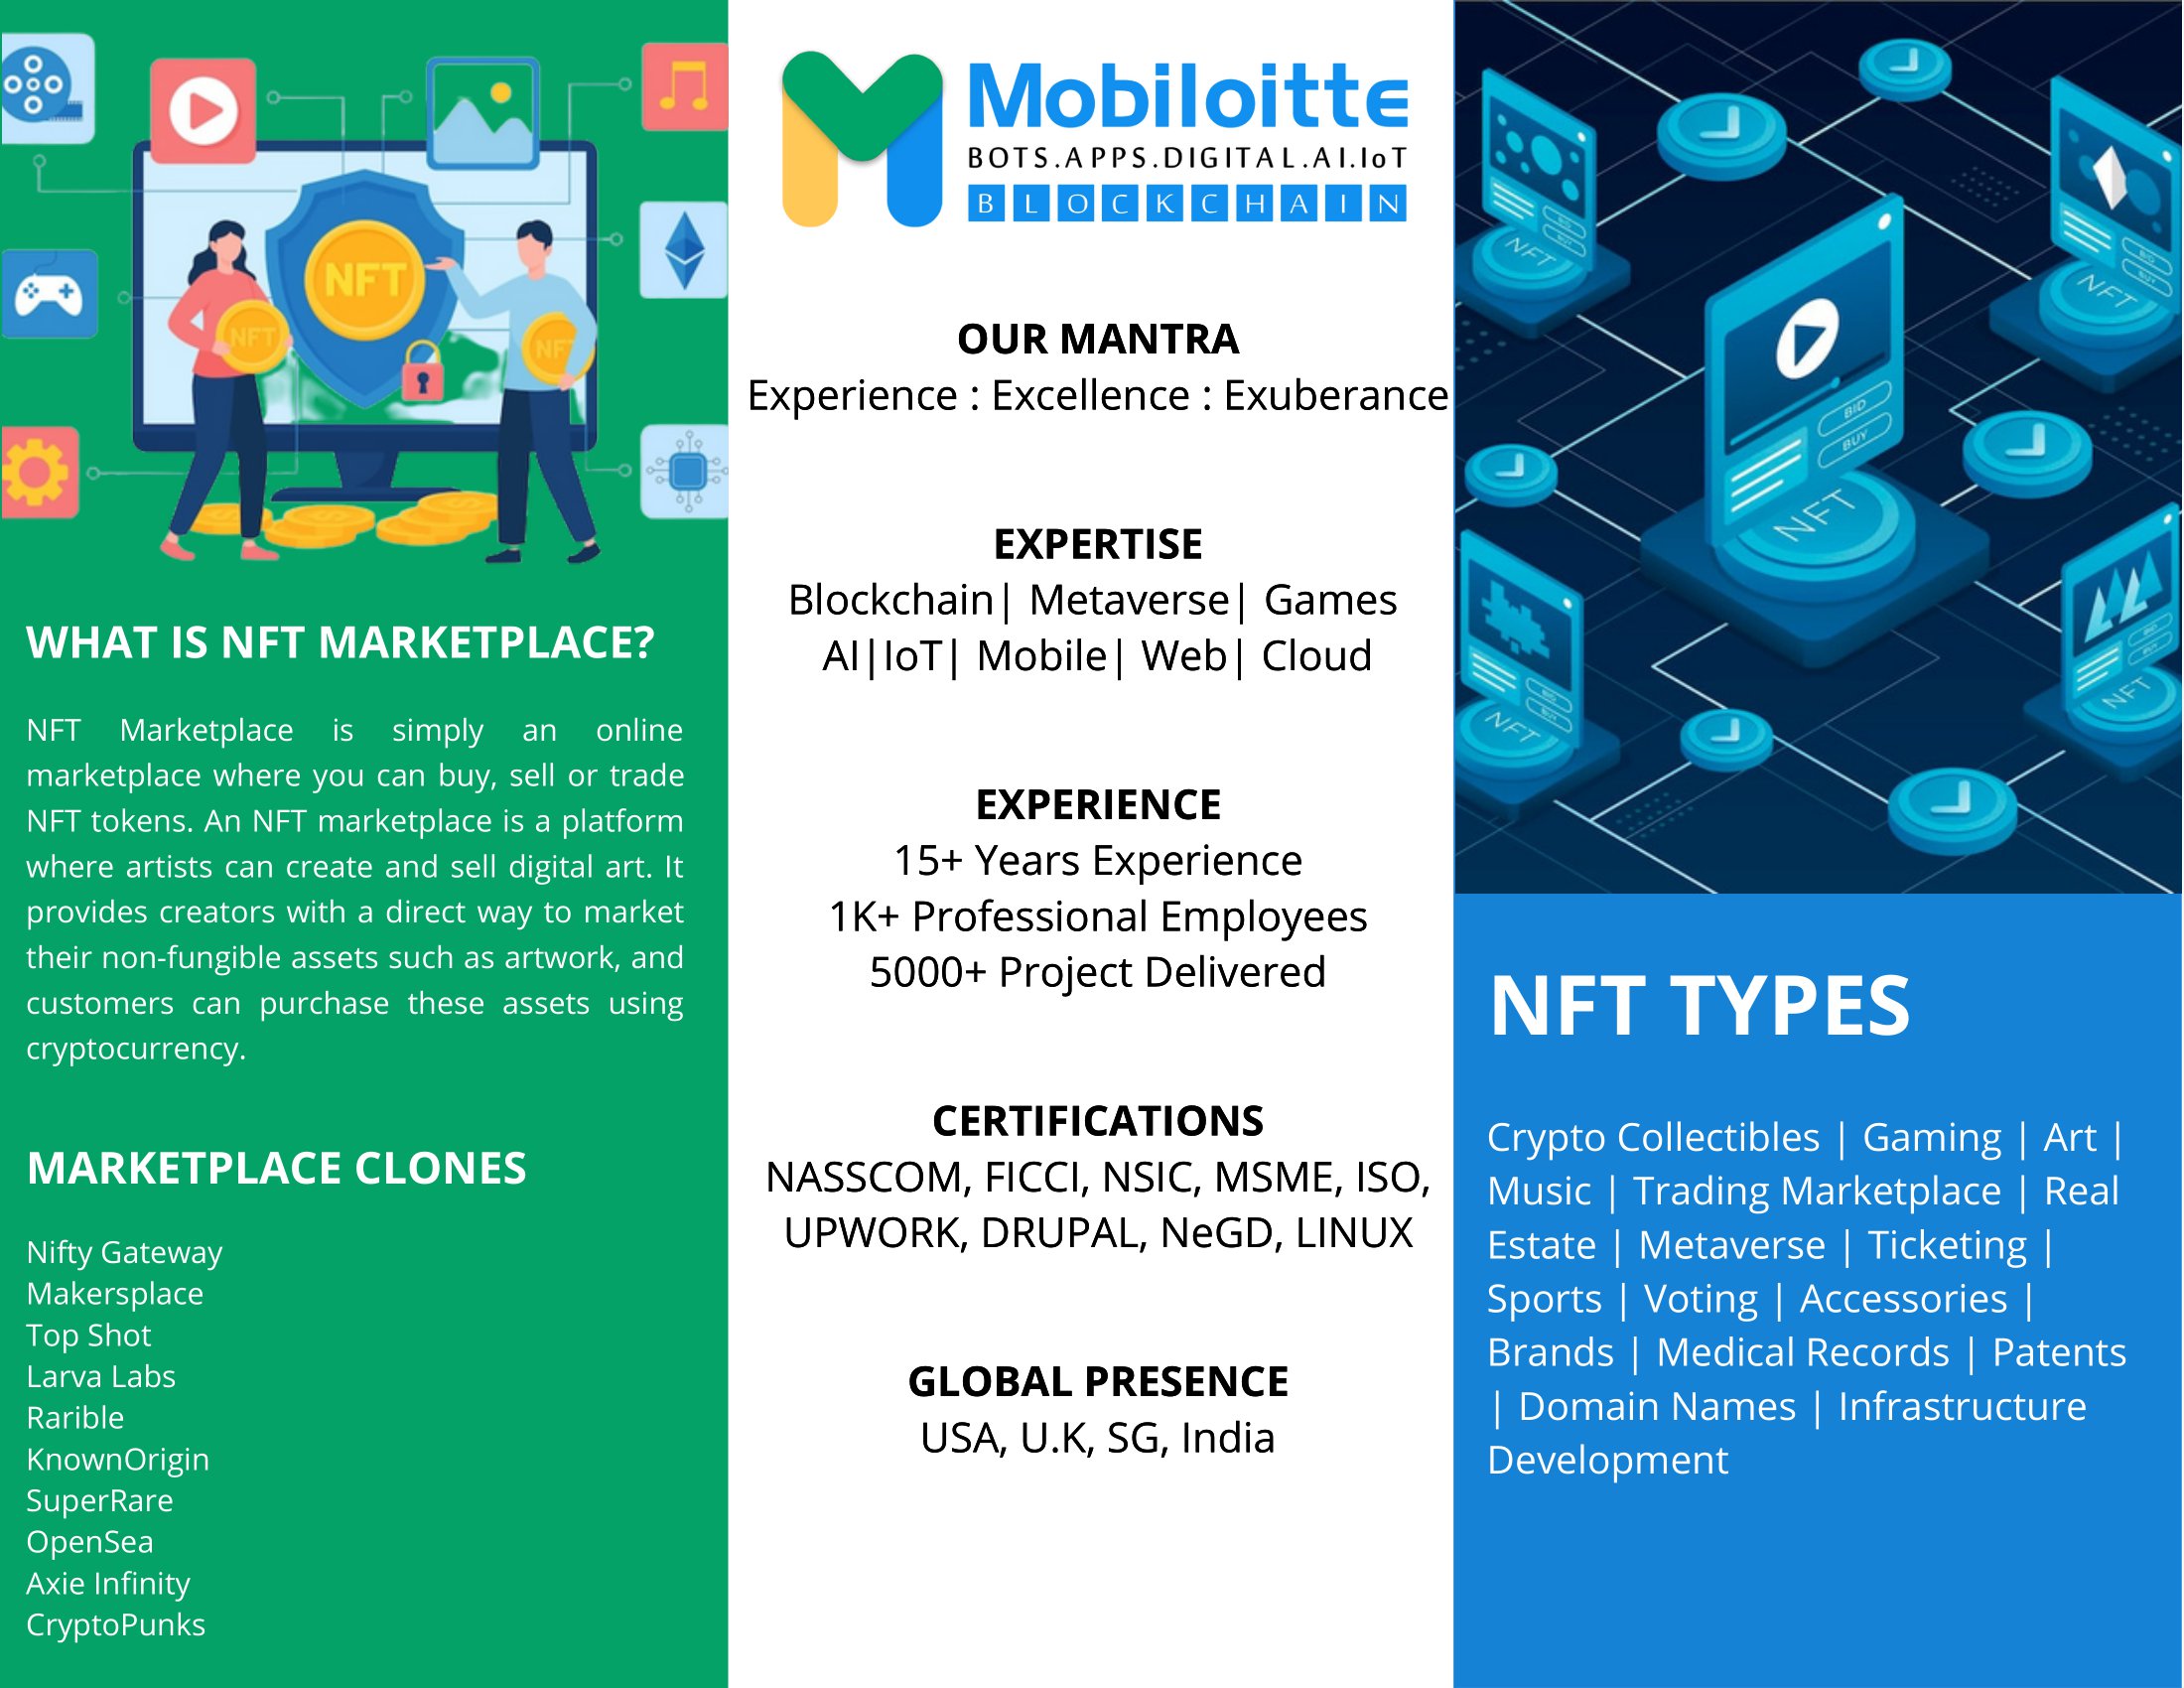 NFT_Marketplace_Mobiloitte